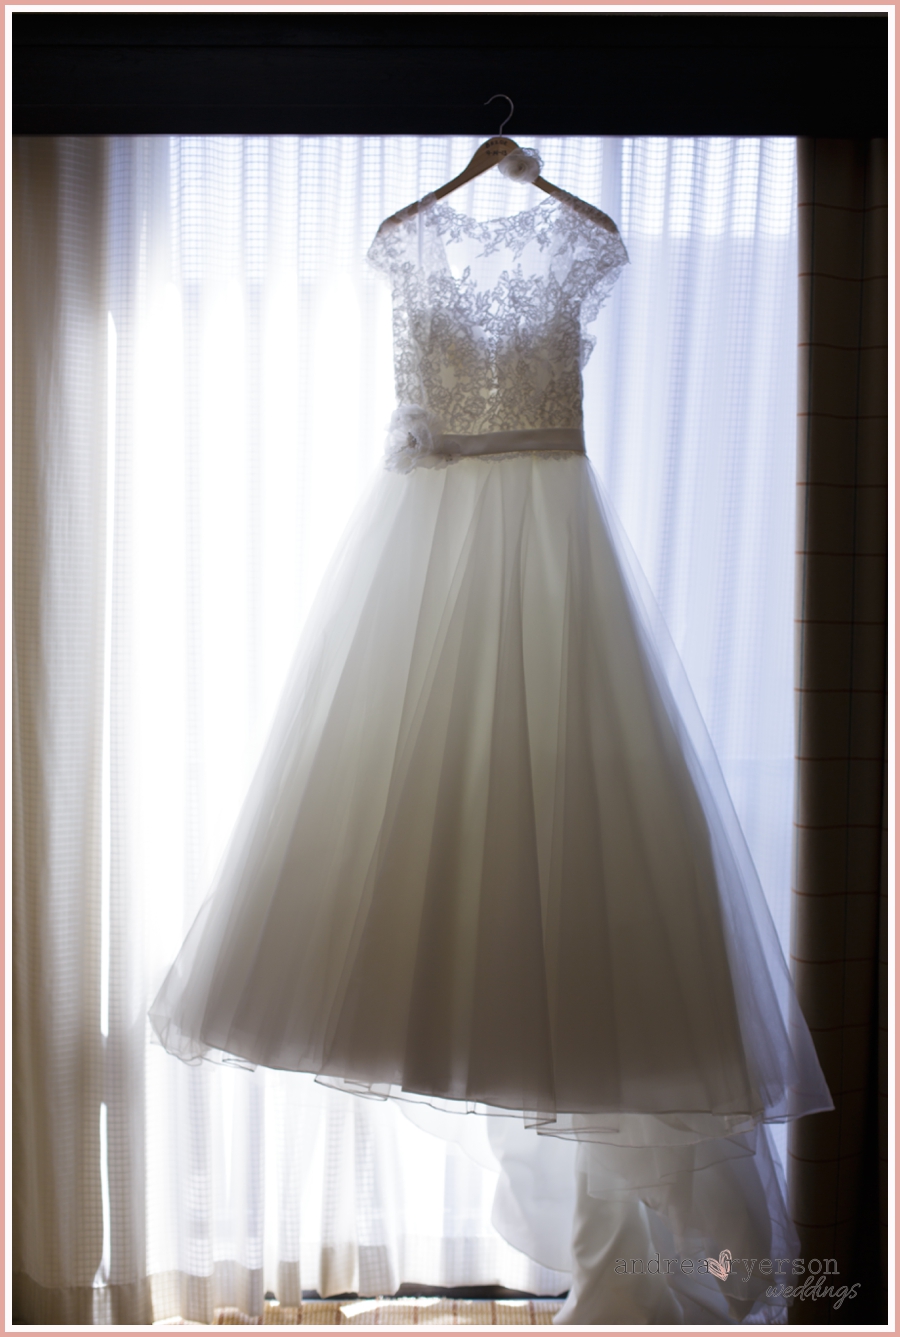 wedding gown in window